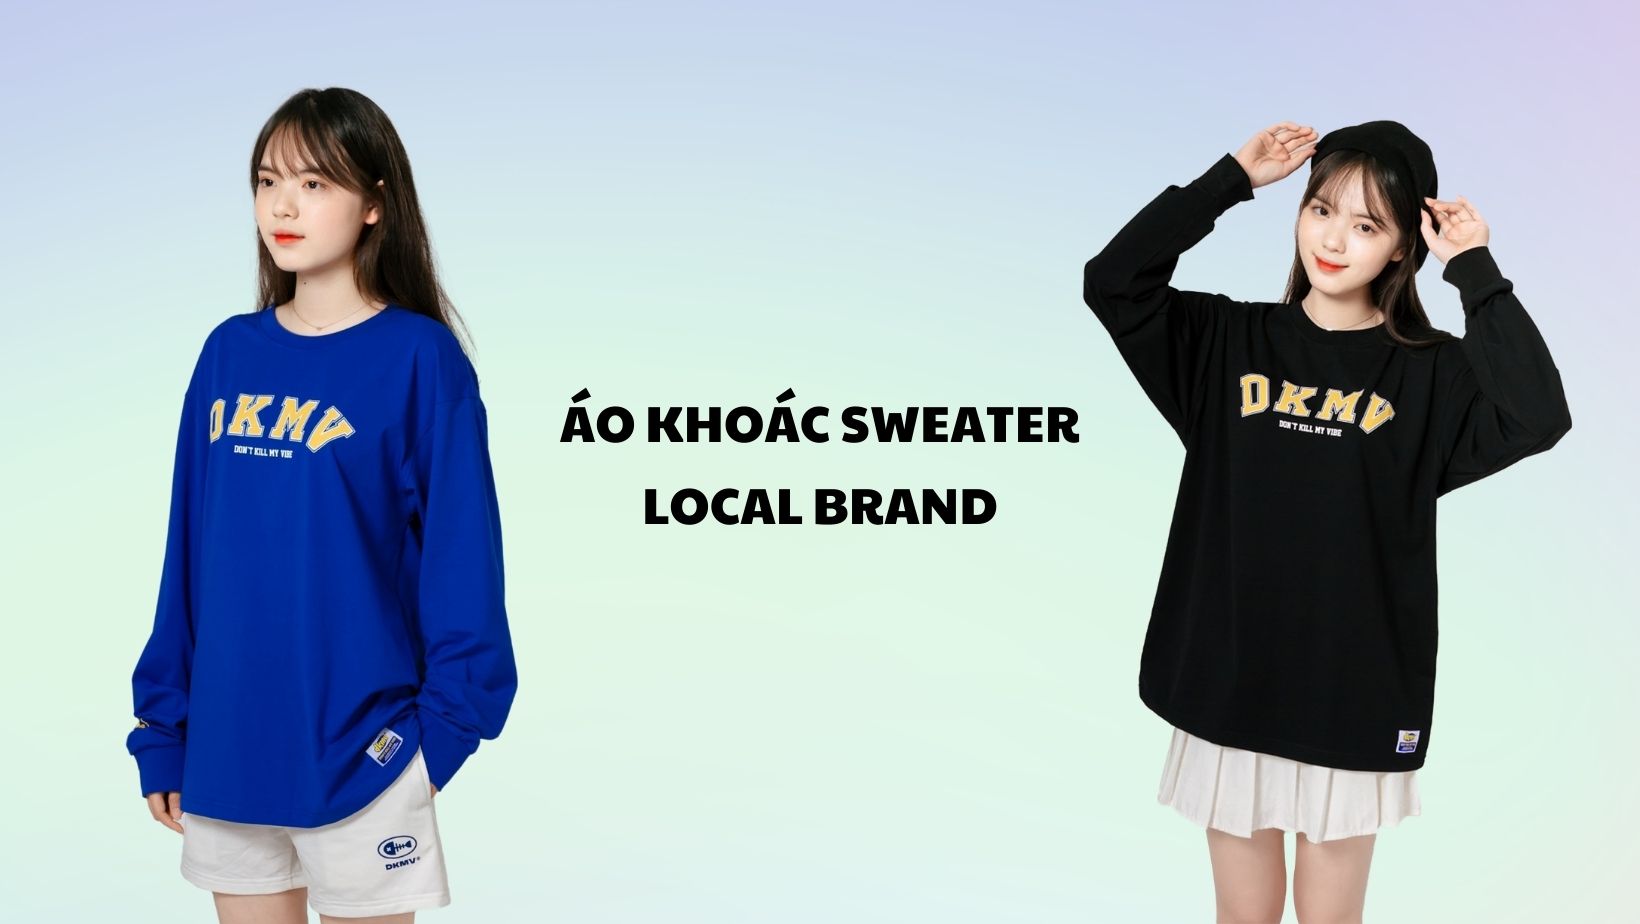 áo khoác sweater local brand dkmv